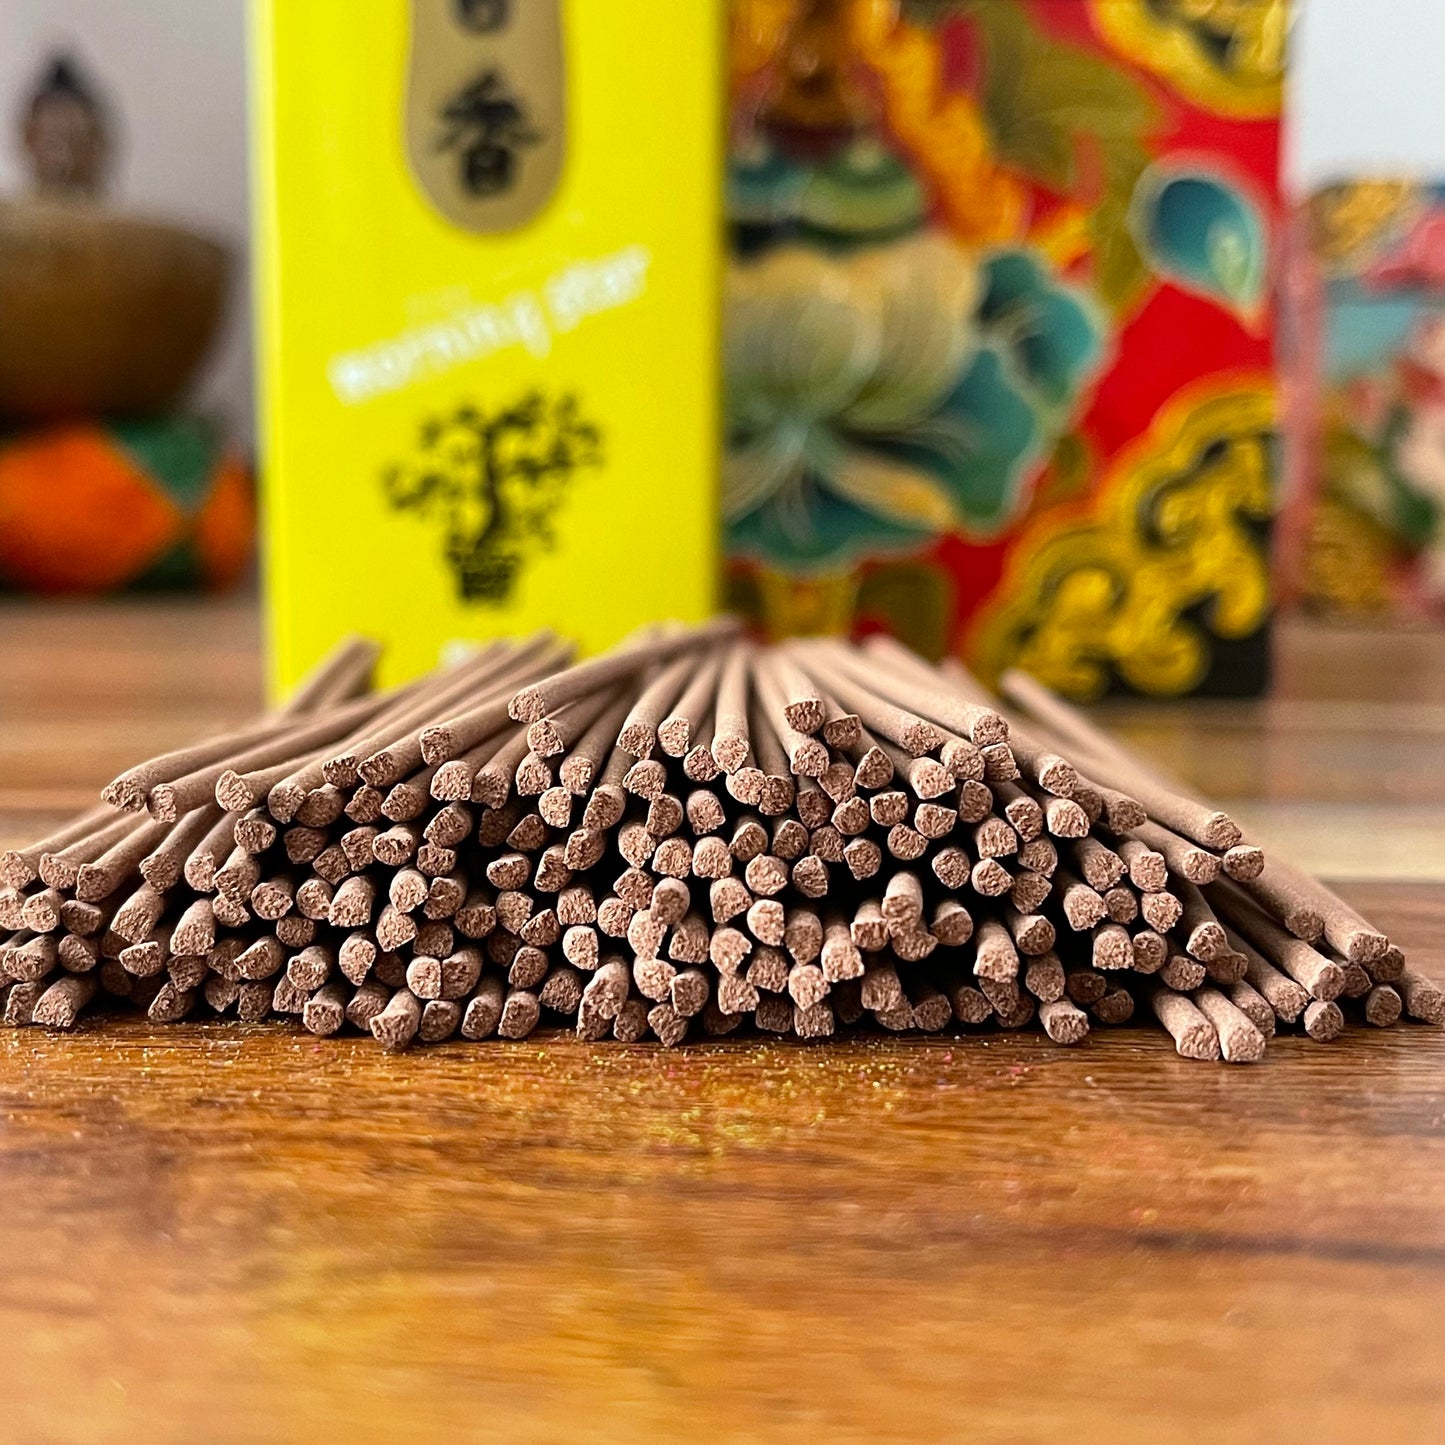 Morning Star Patchouli Incense 200 sticks